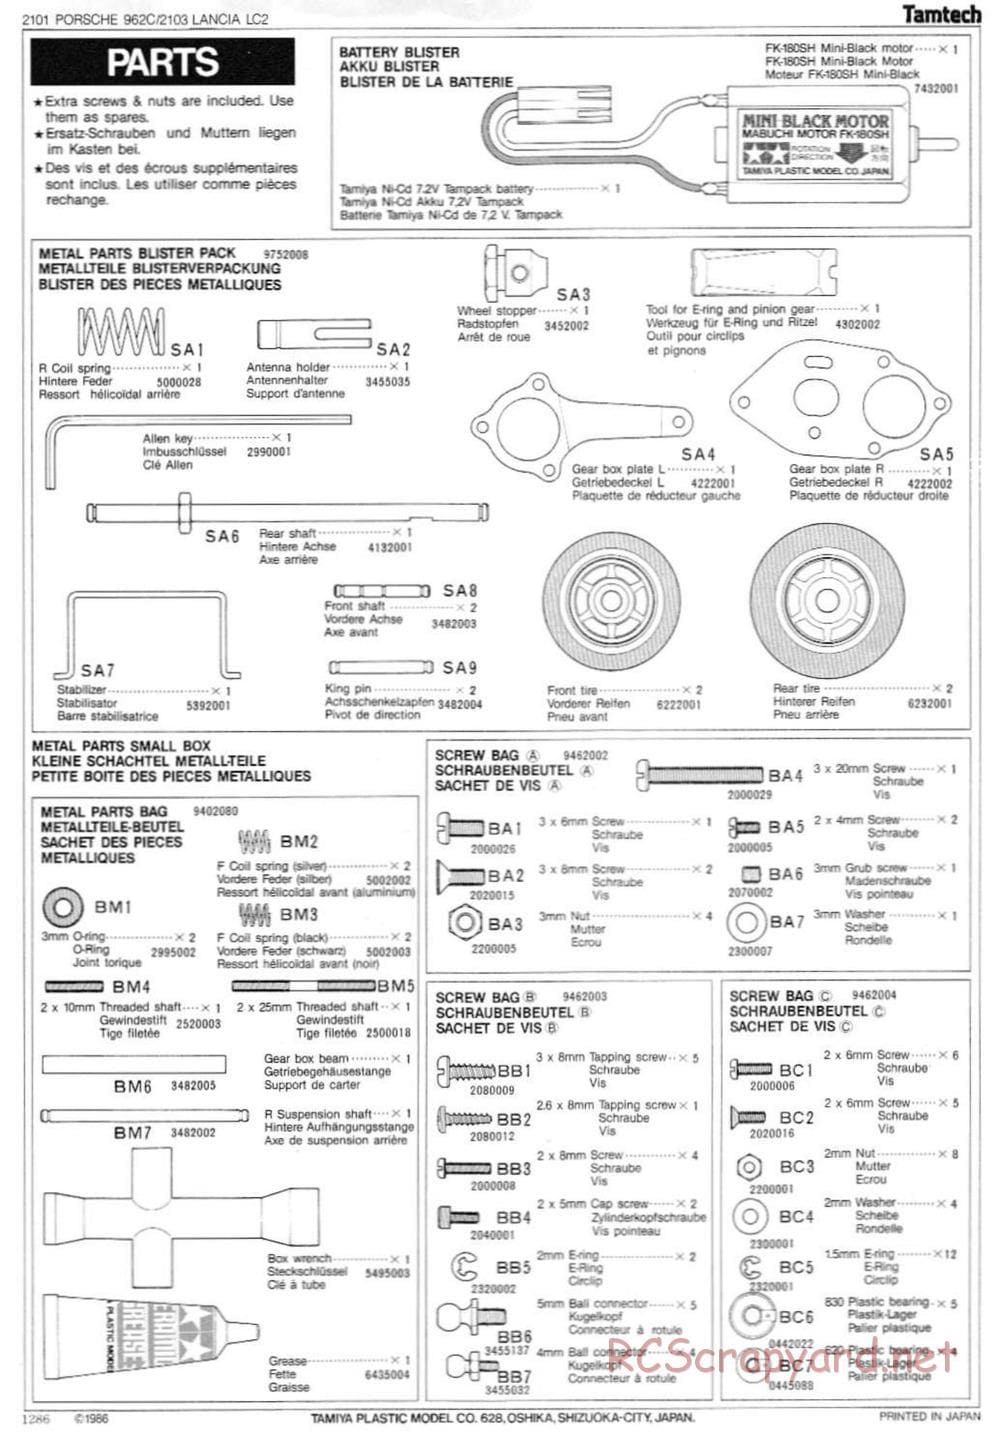 Tamiya - Tamtech - Porsche 962C Chassis - Manual - Page 17